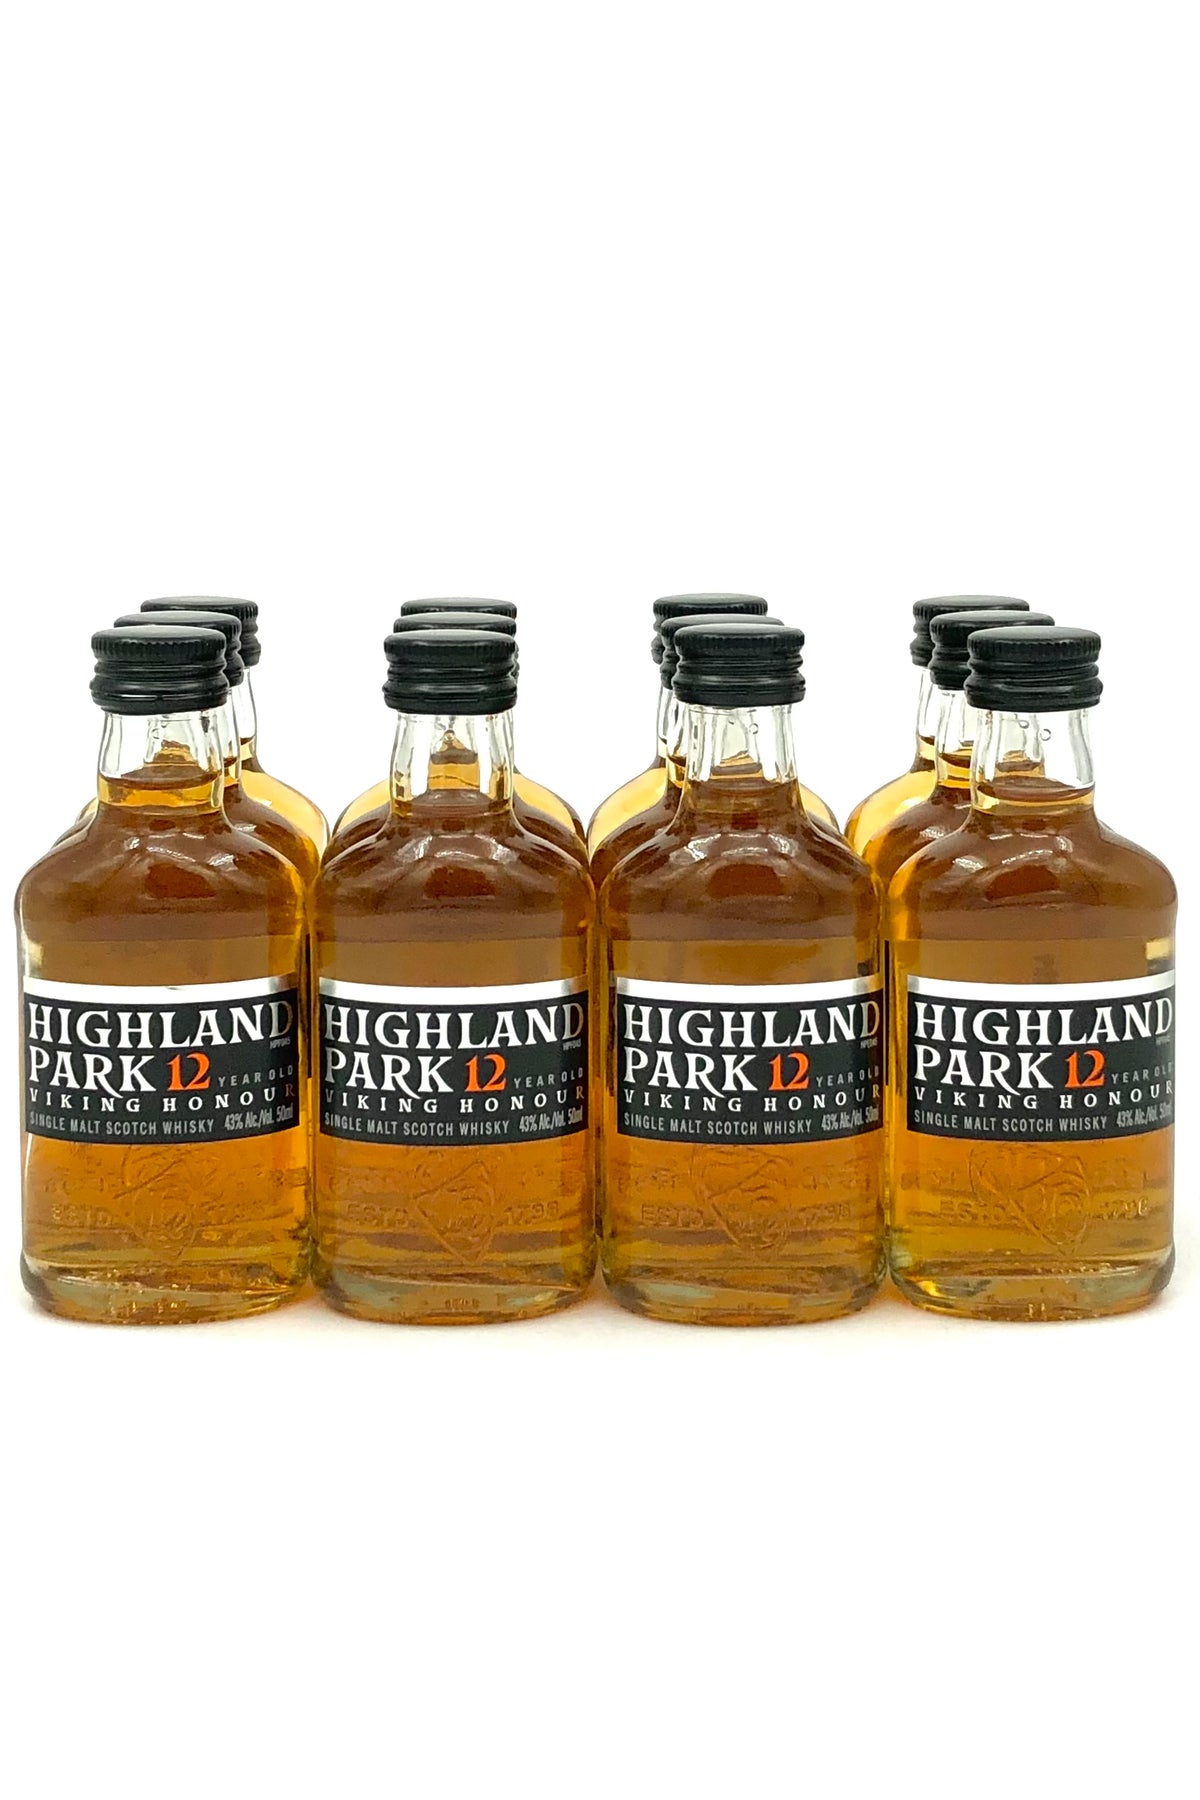 Highland Park 12 Year Old Scotch Whisky 12 x 50 ml